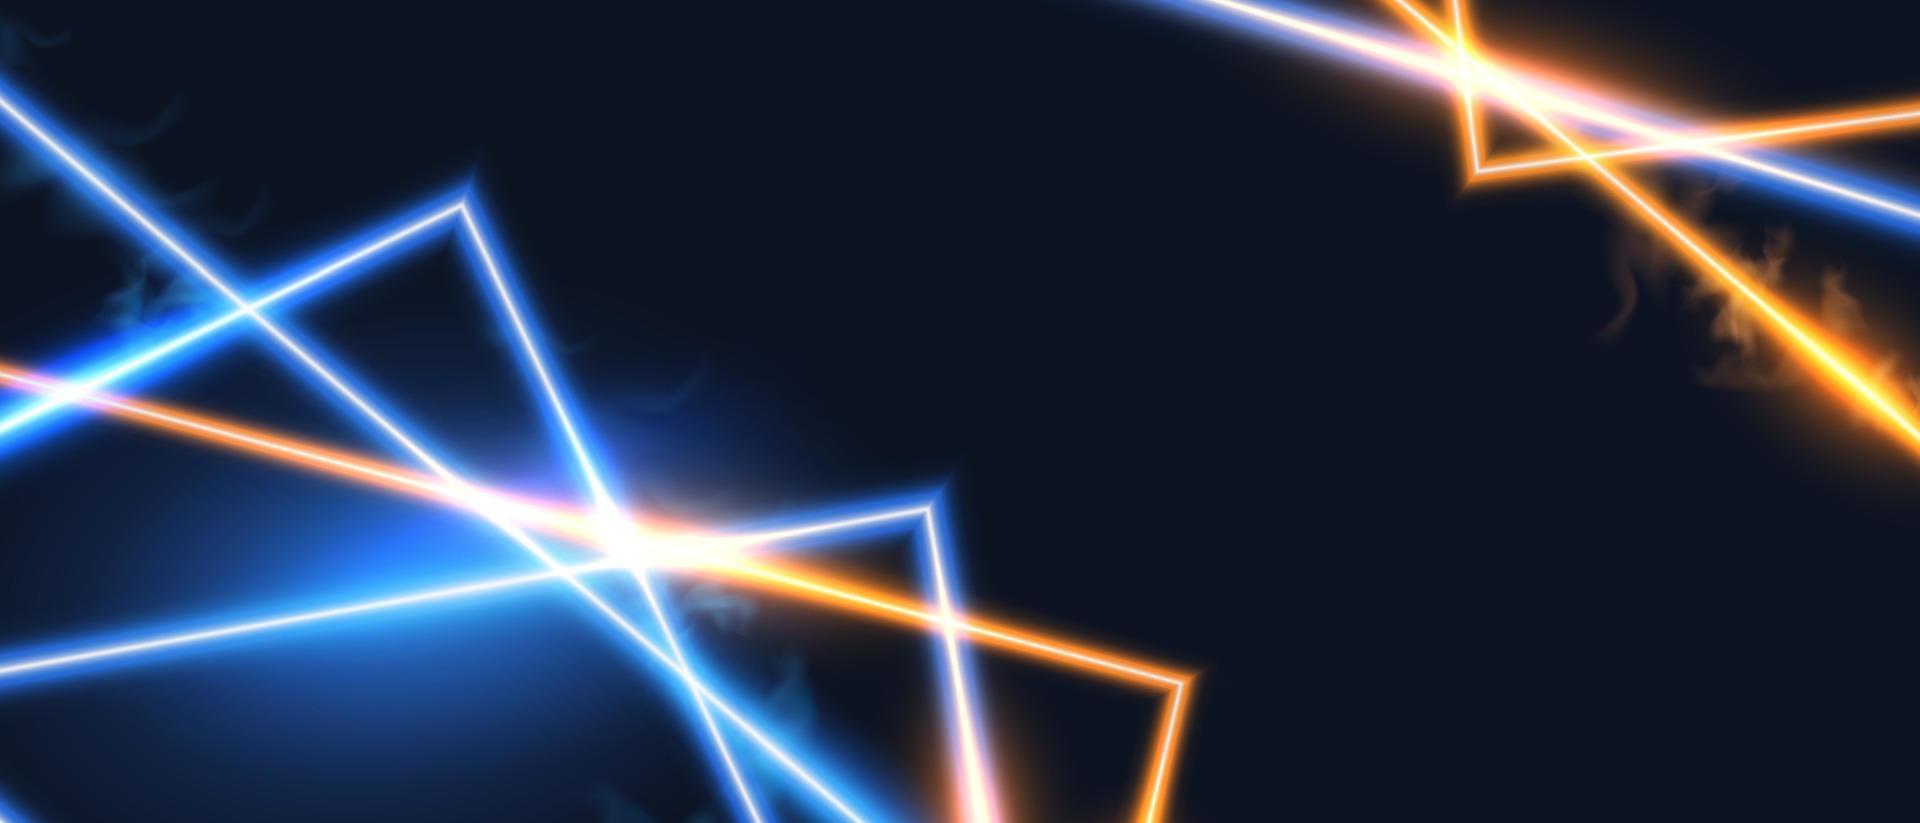 Futuristic glowing neon lights background vector illustration.